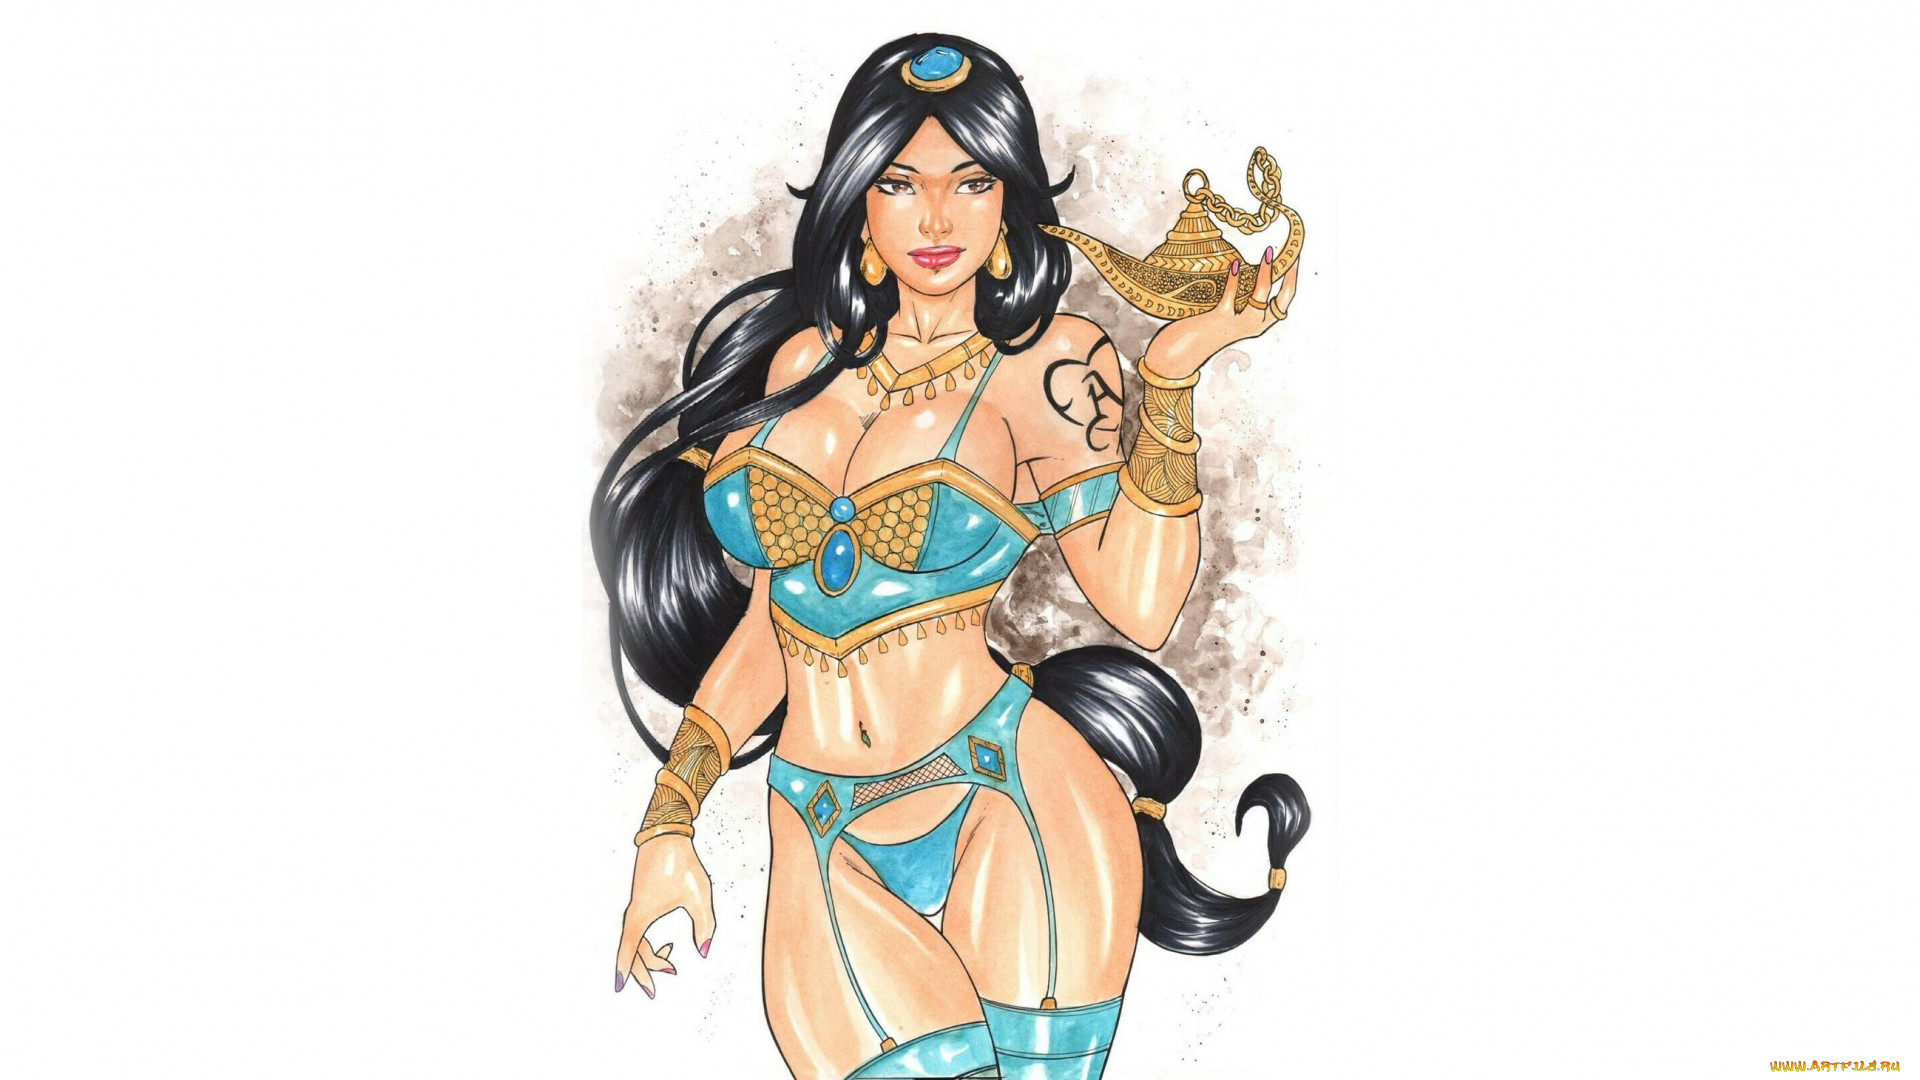 General 1920x1080 fantasy art women fantasy girl standing dark hair long hair lingerie simple background white background boobs big boobs lamp Princess Jasmine